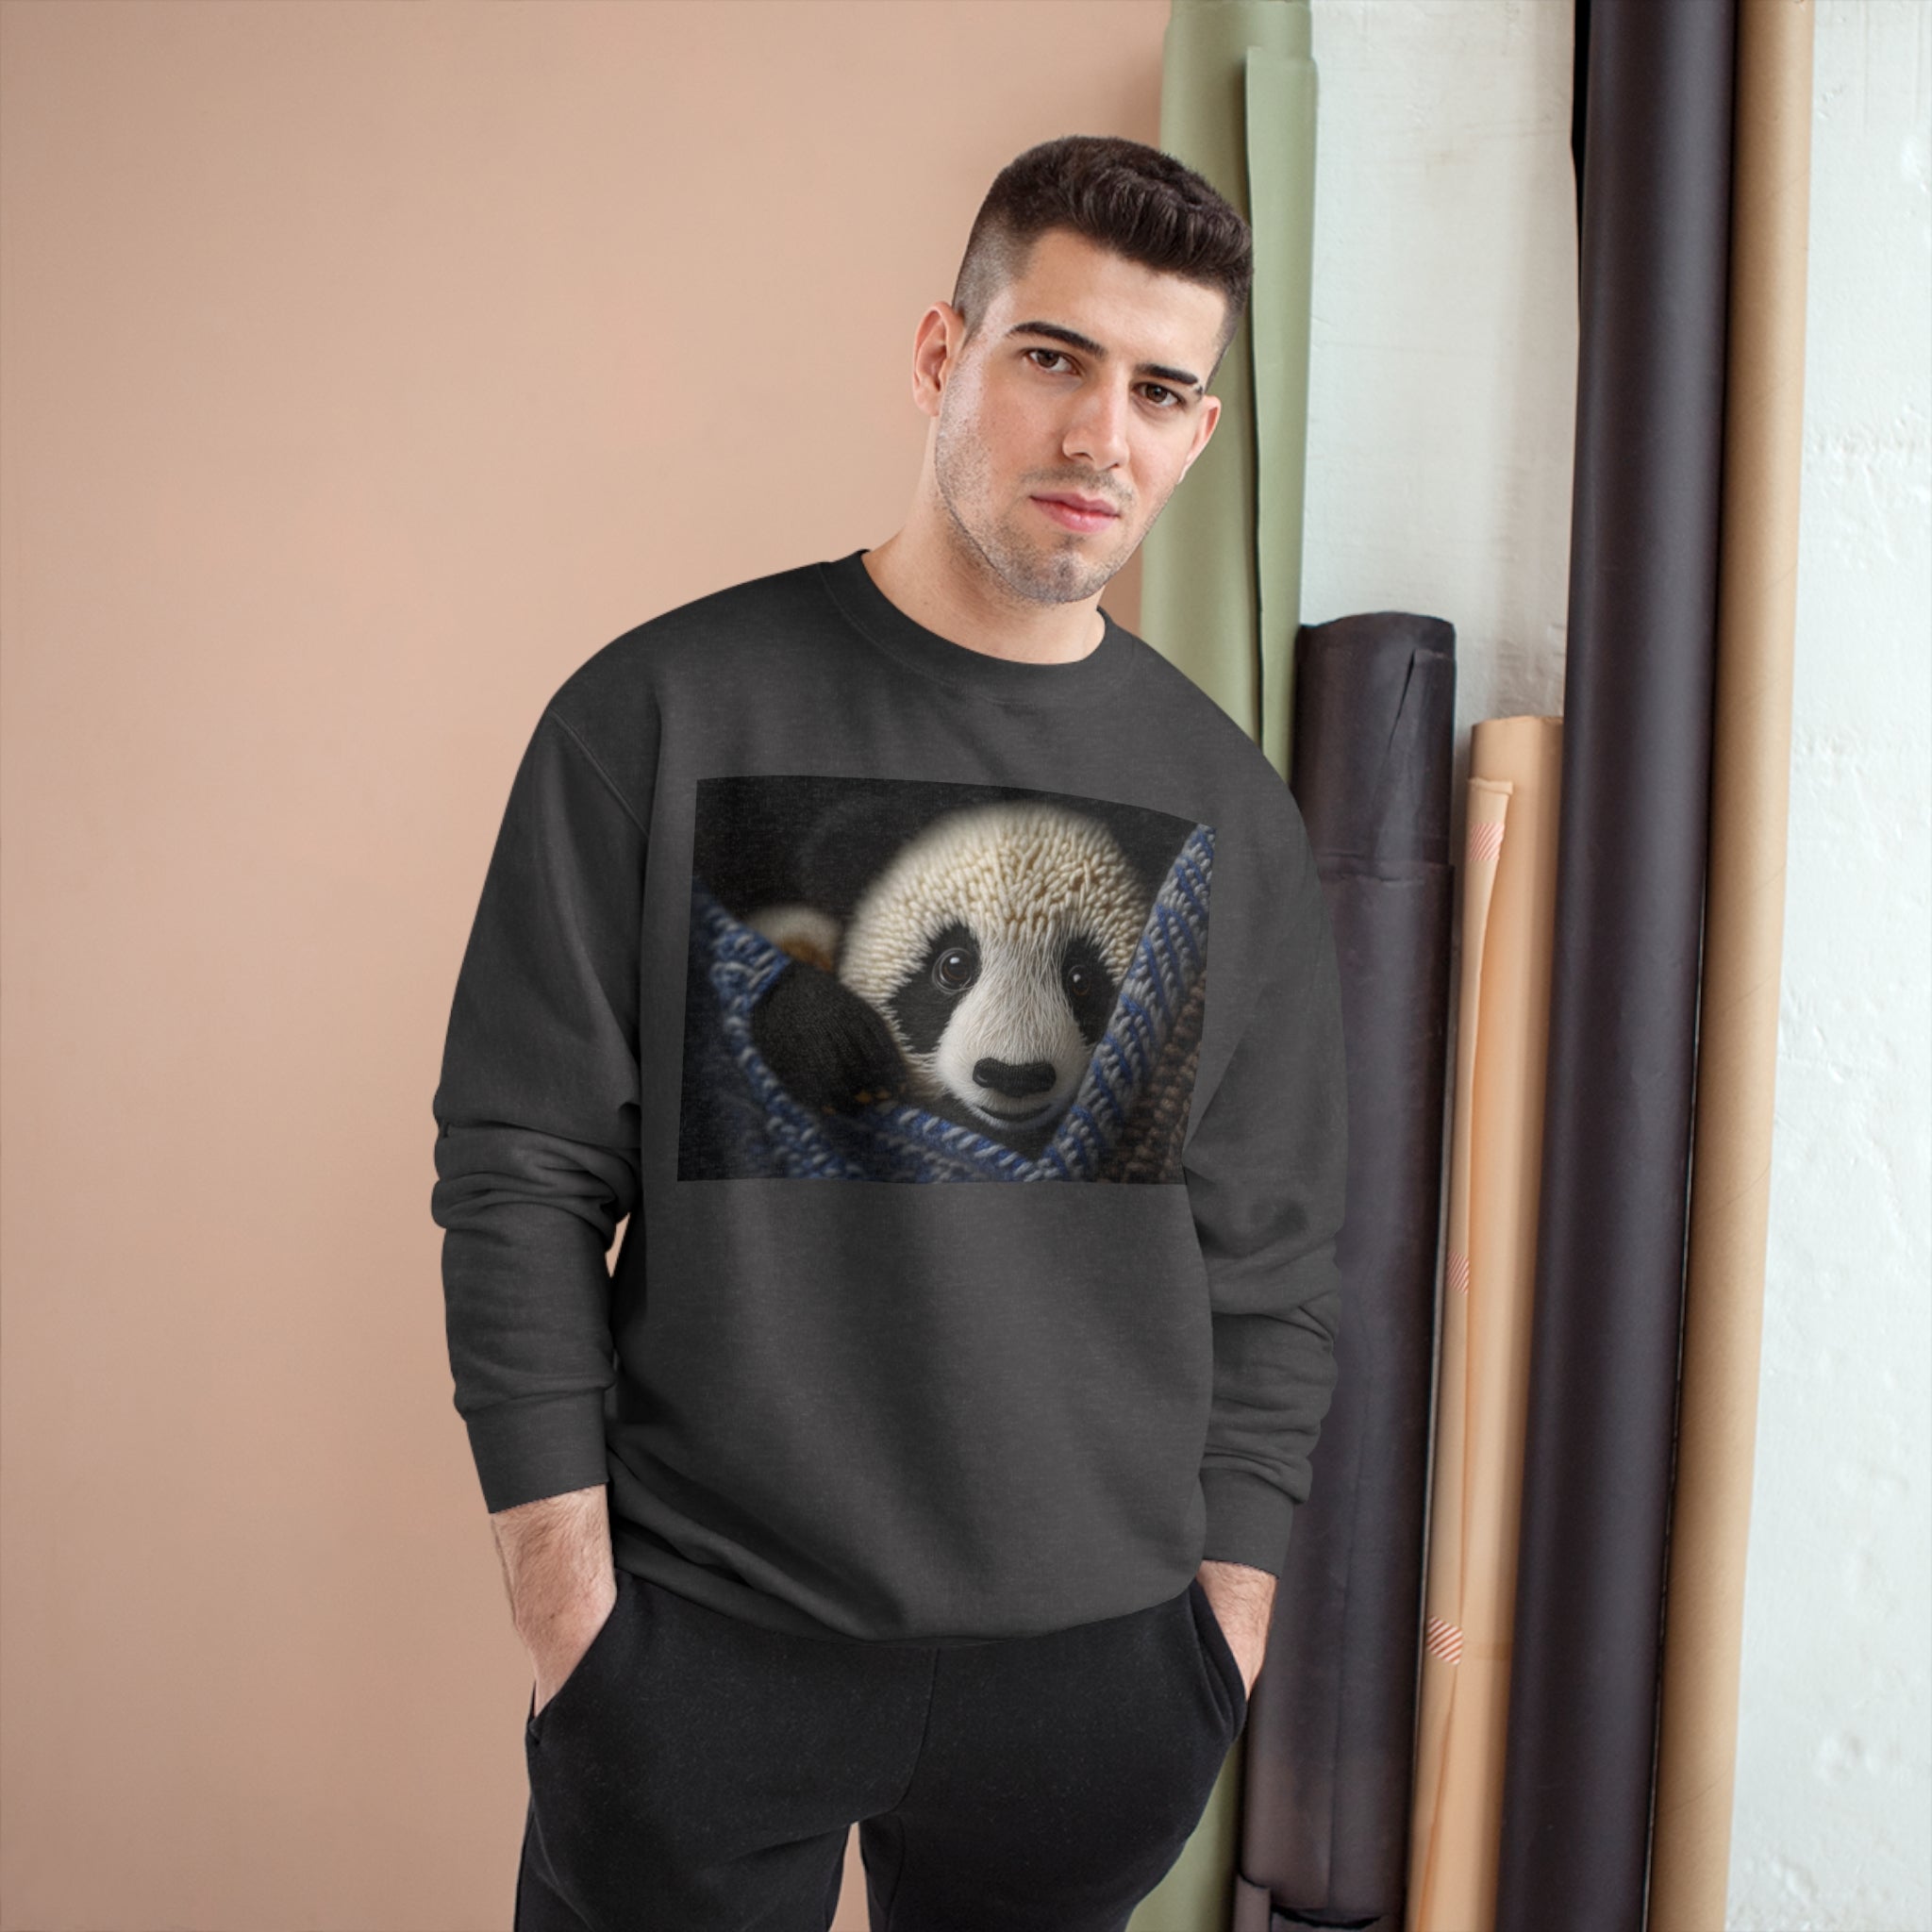 Champion Sweatshirt - Knit Animals, Giant Panda Cub